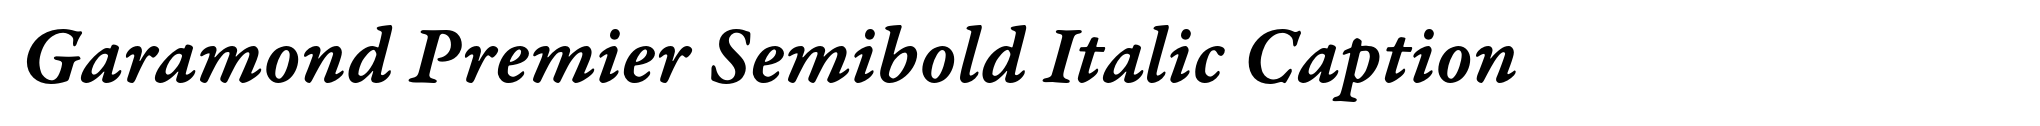 Garamond Premier Semibold Italic Caption image